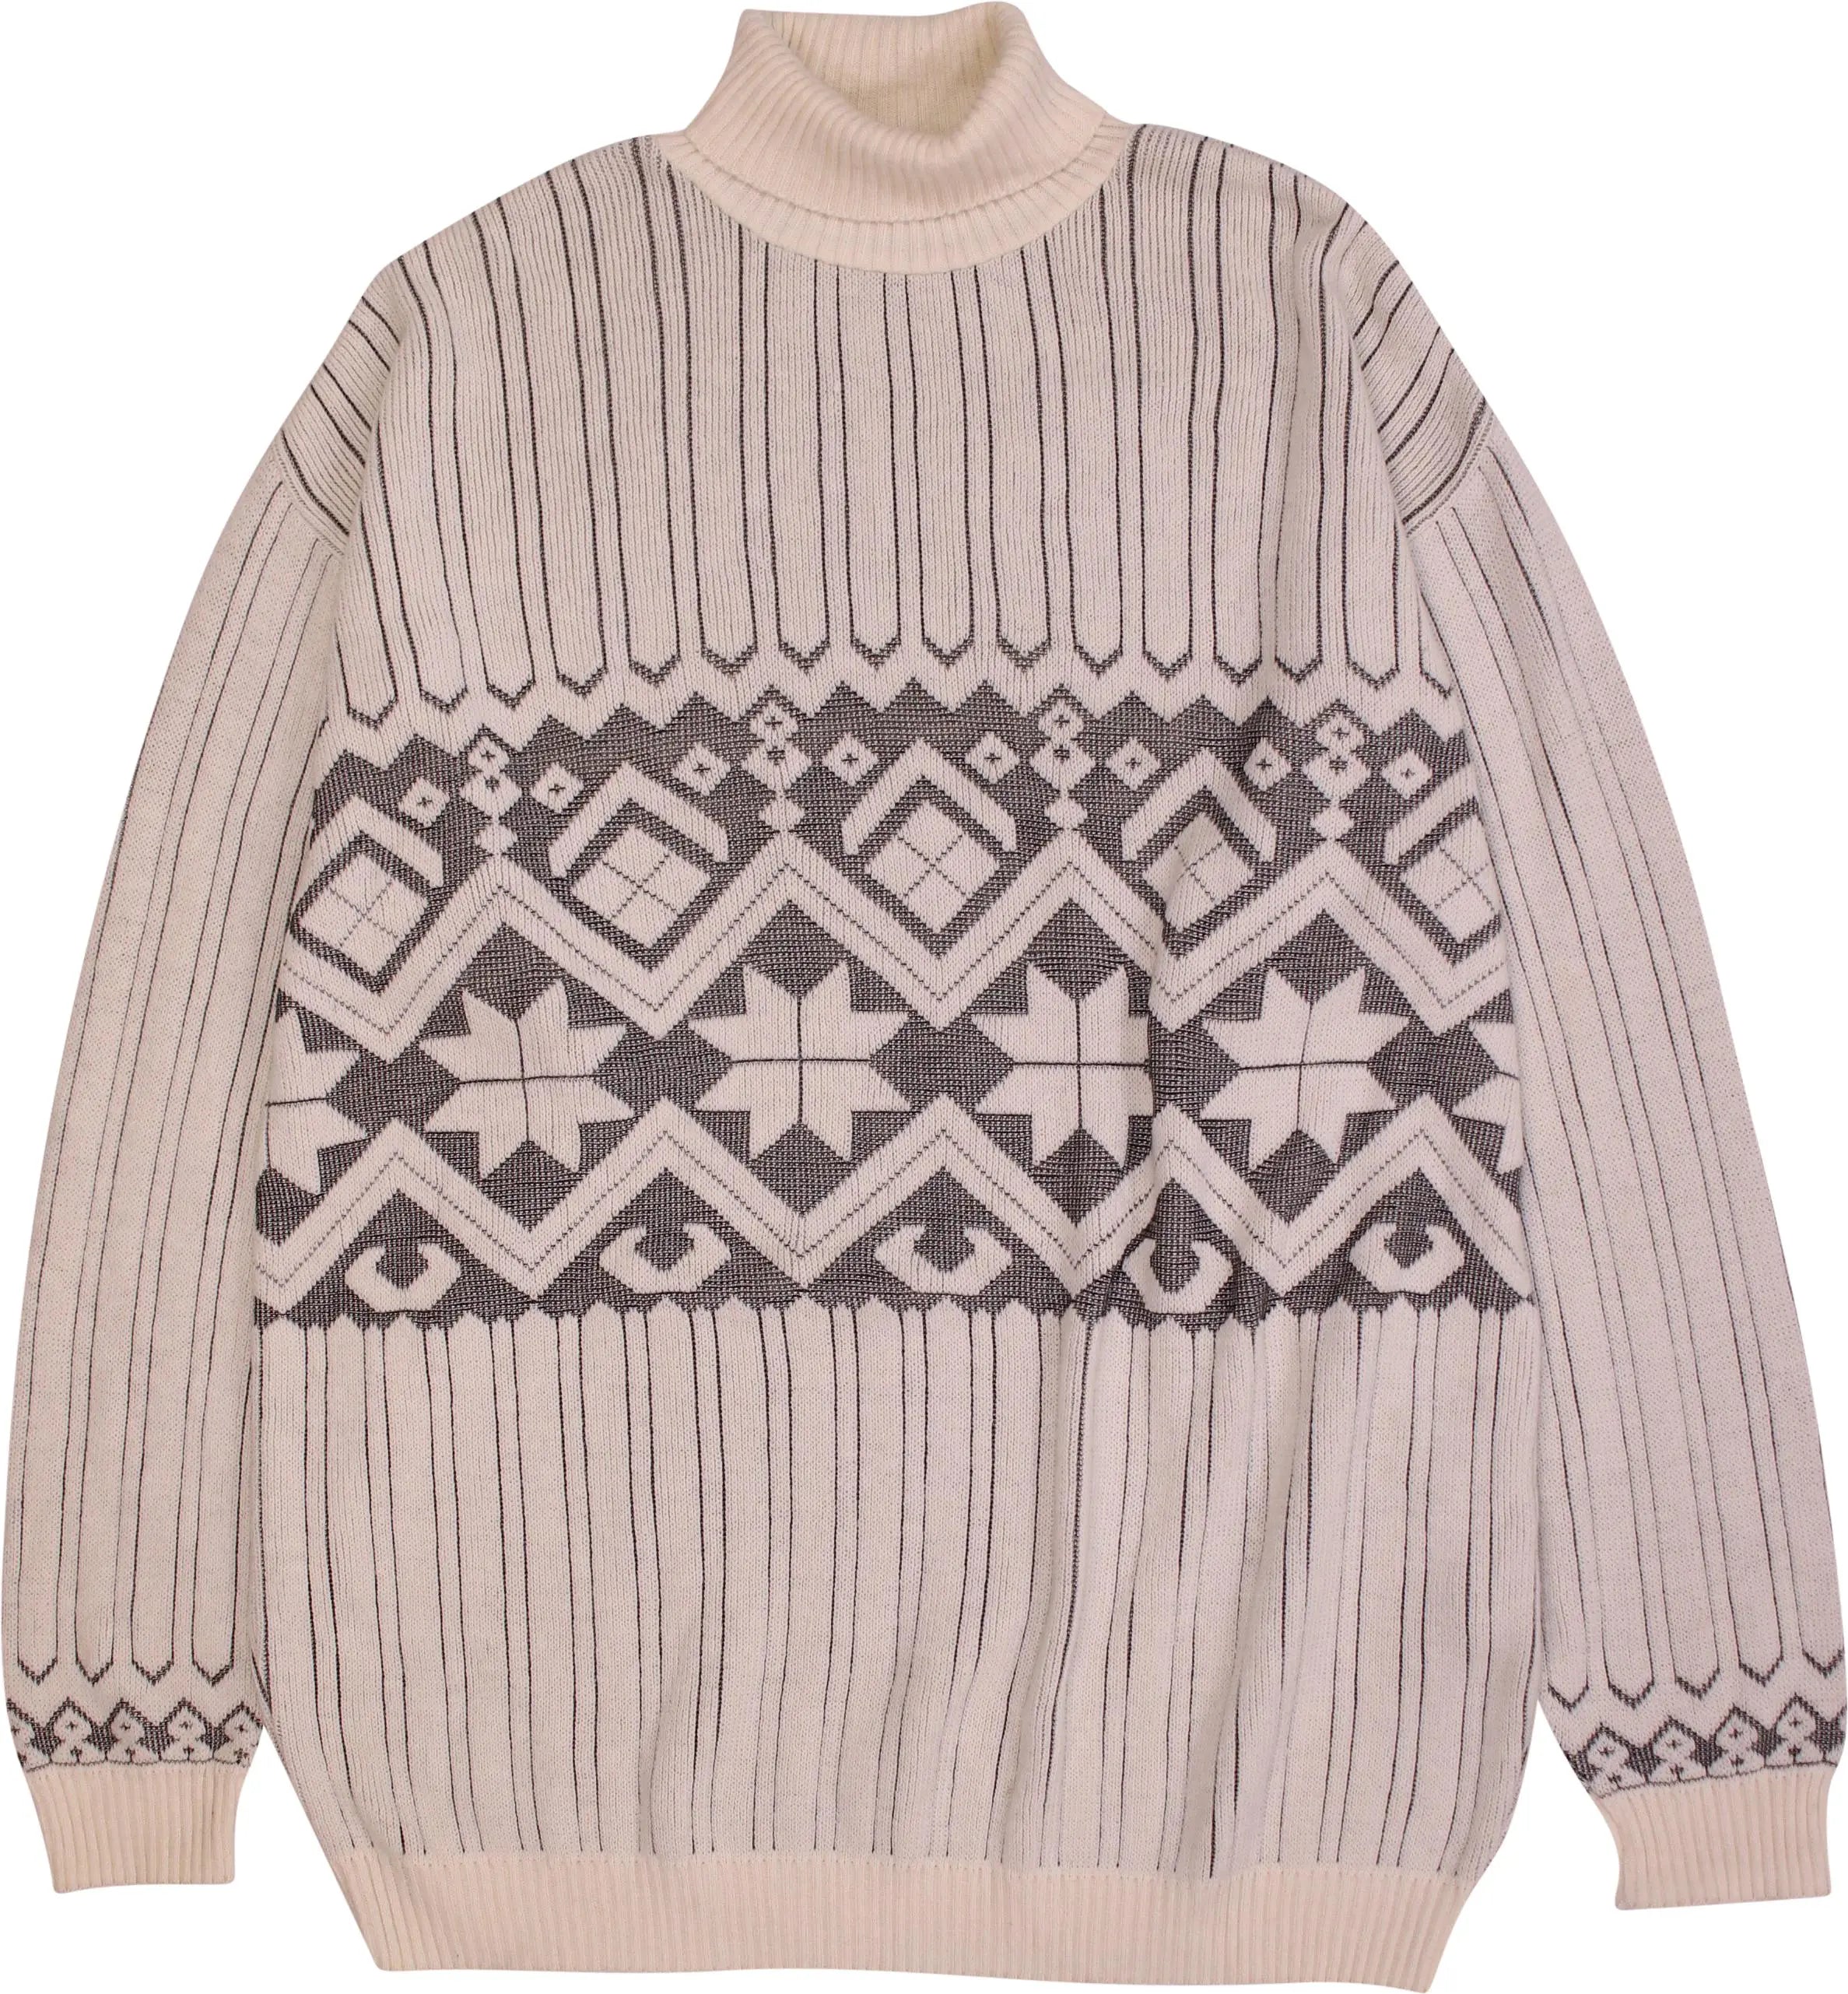 Vinci - Cream Wool Blend Knitted Oversized Turtleneck Jumper- ThriftTale.com - Vintage and second handclothing